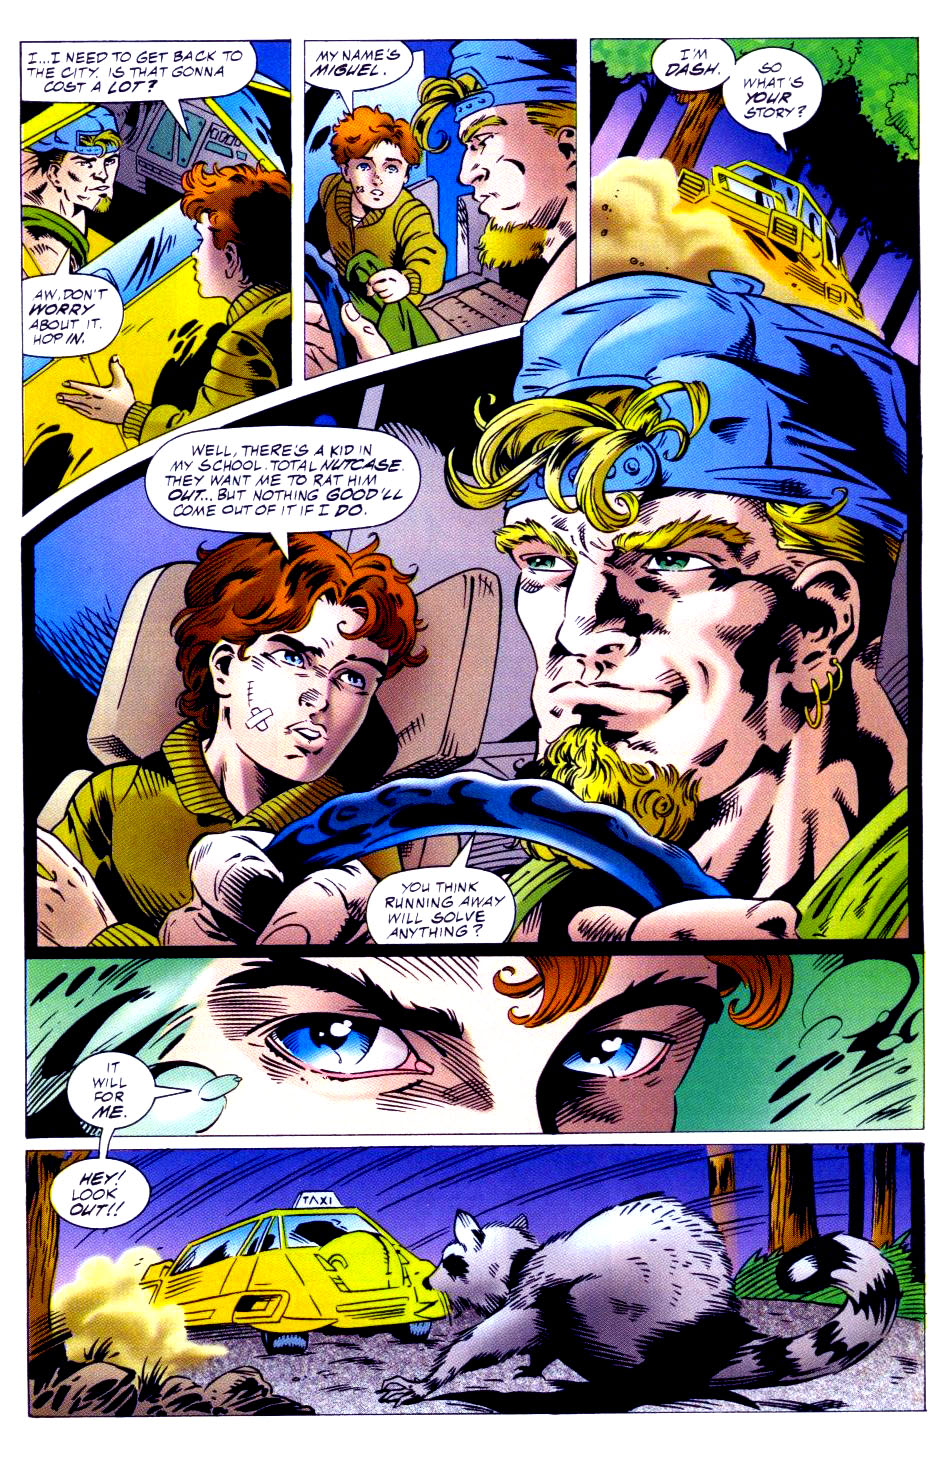 Spider-Man 2099 (1992) issue 32 - Page 20